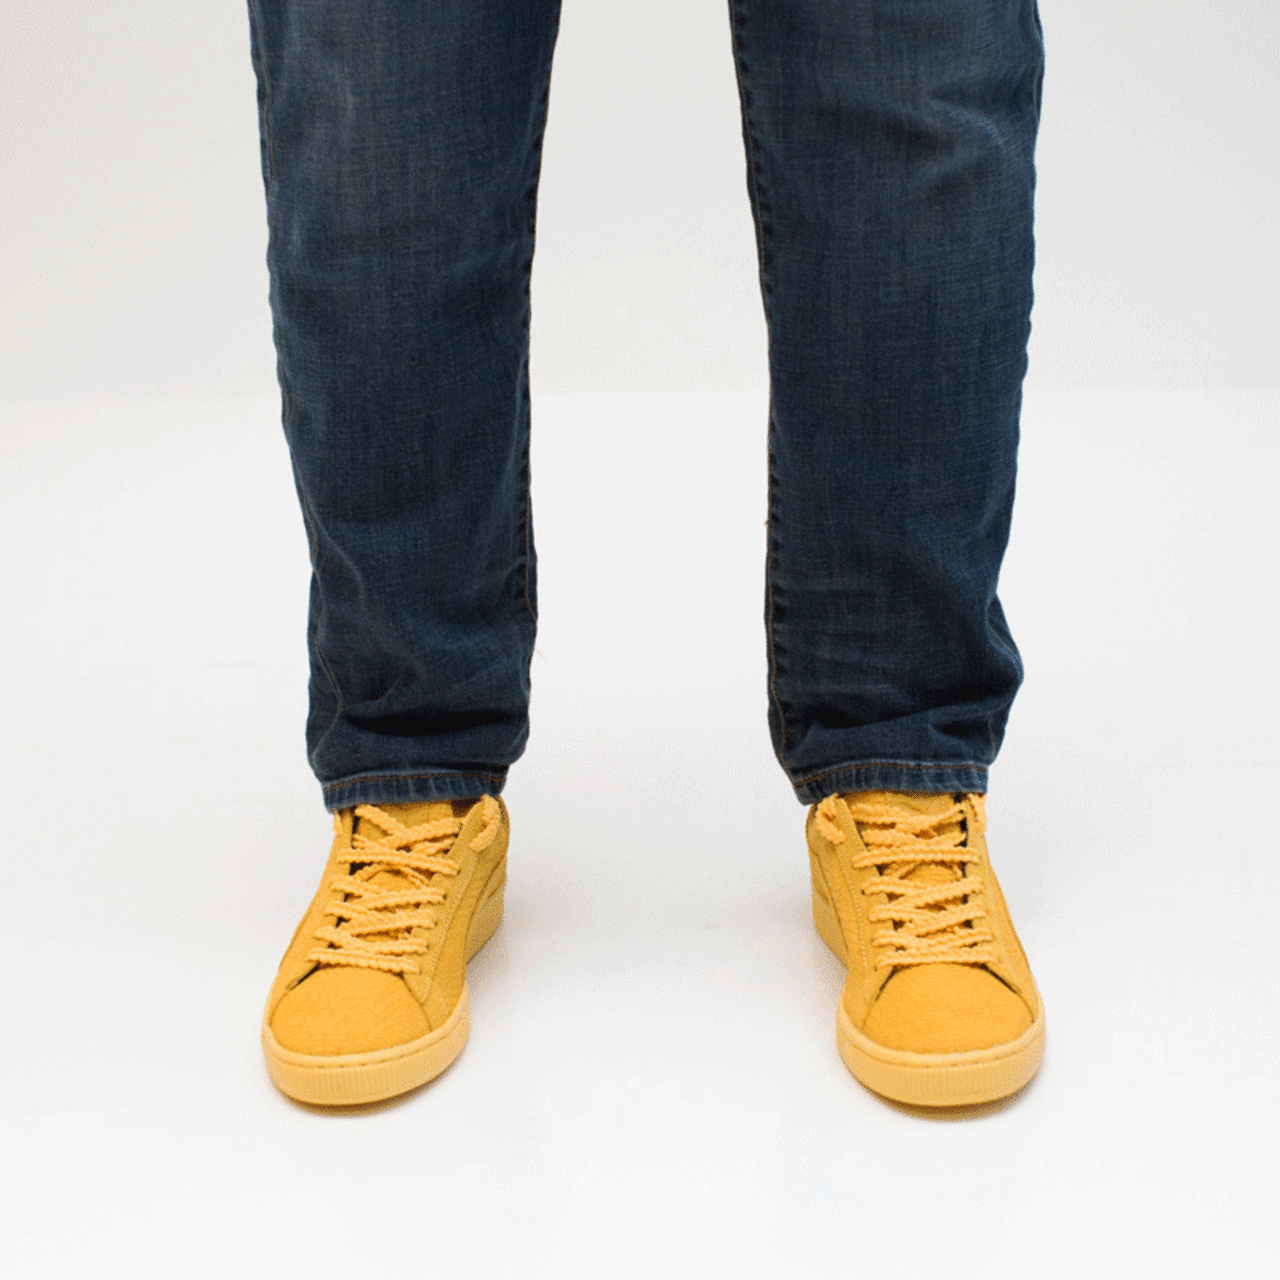 cómo to cuff jeans4